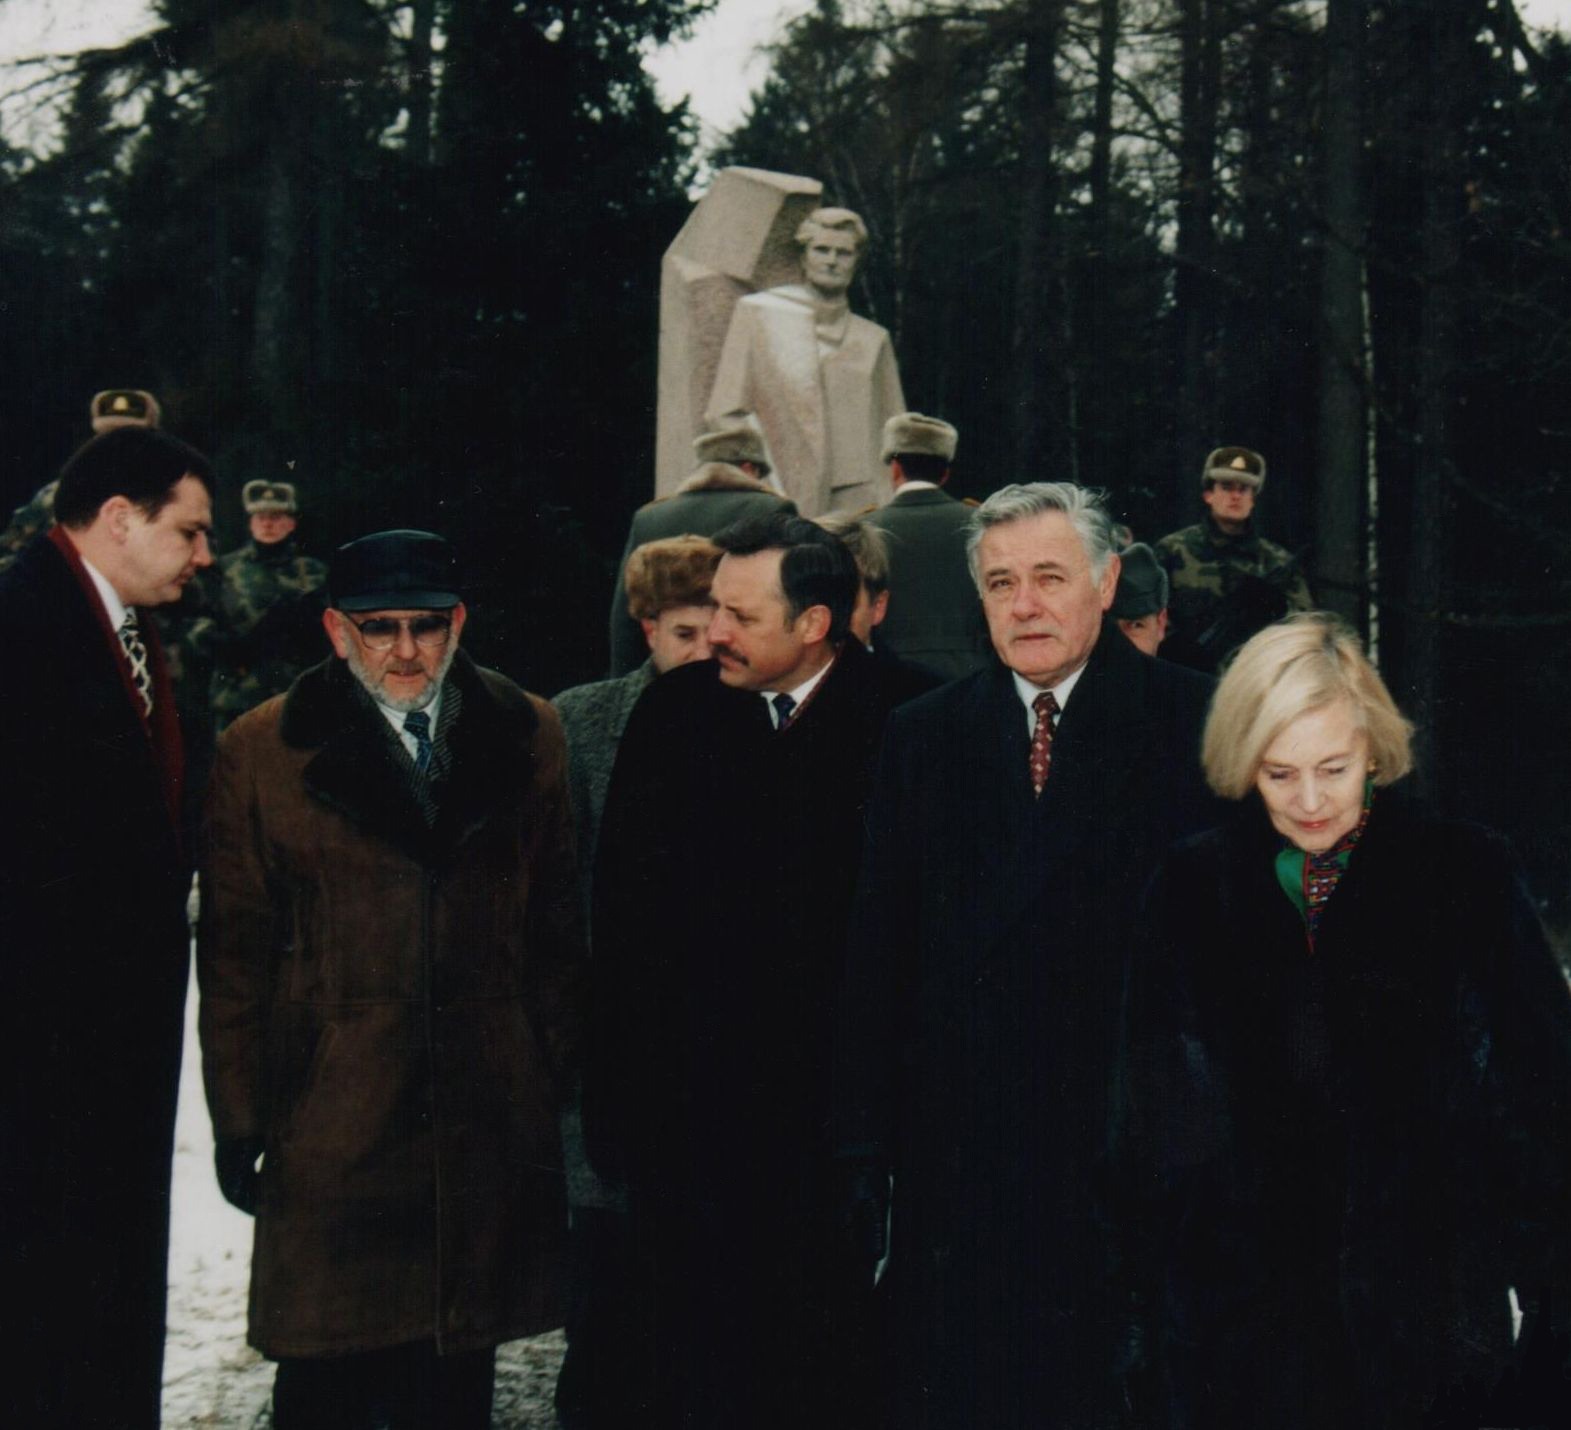 Prie paminklo Prezidentui K. Griniui su Marijampolės apskrities viršininku Jankausku, LR Prezidentu V. Adamkumi ir A. Adamkiene. 1998 m. lapkričio 27 d.